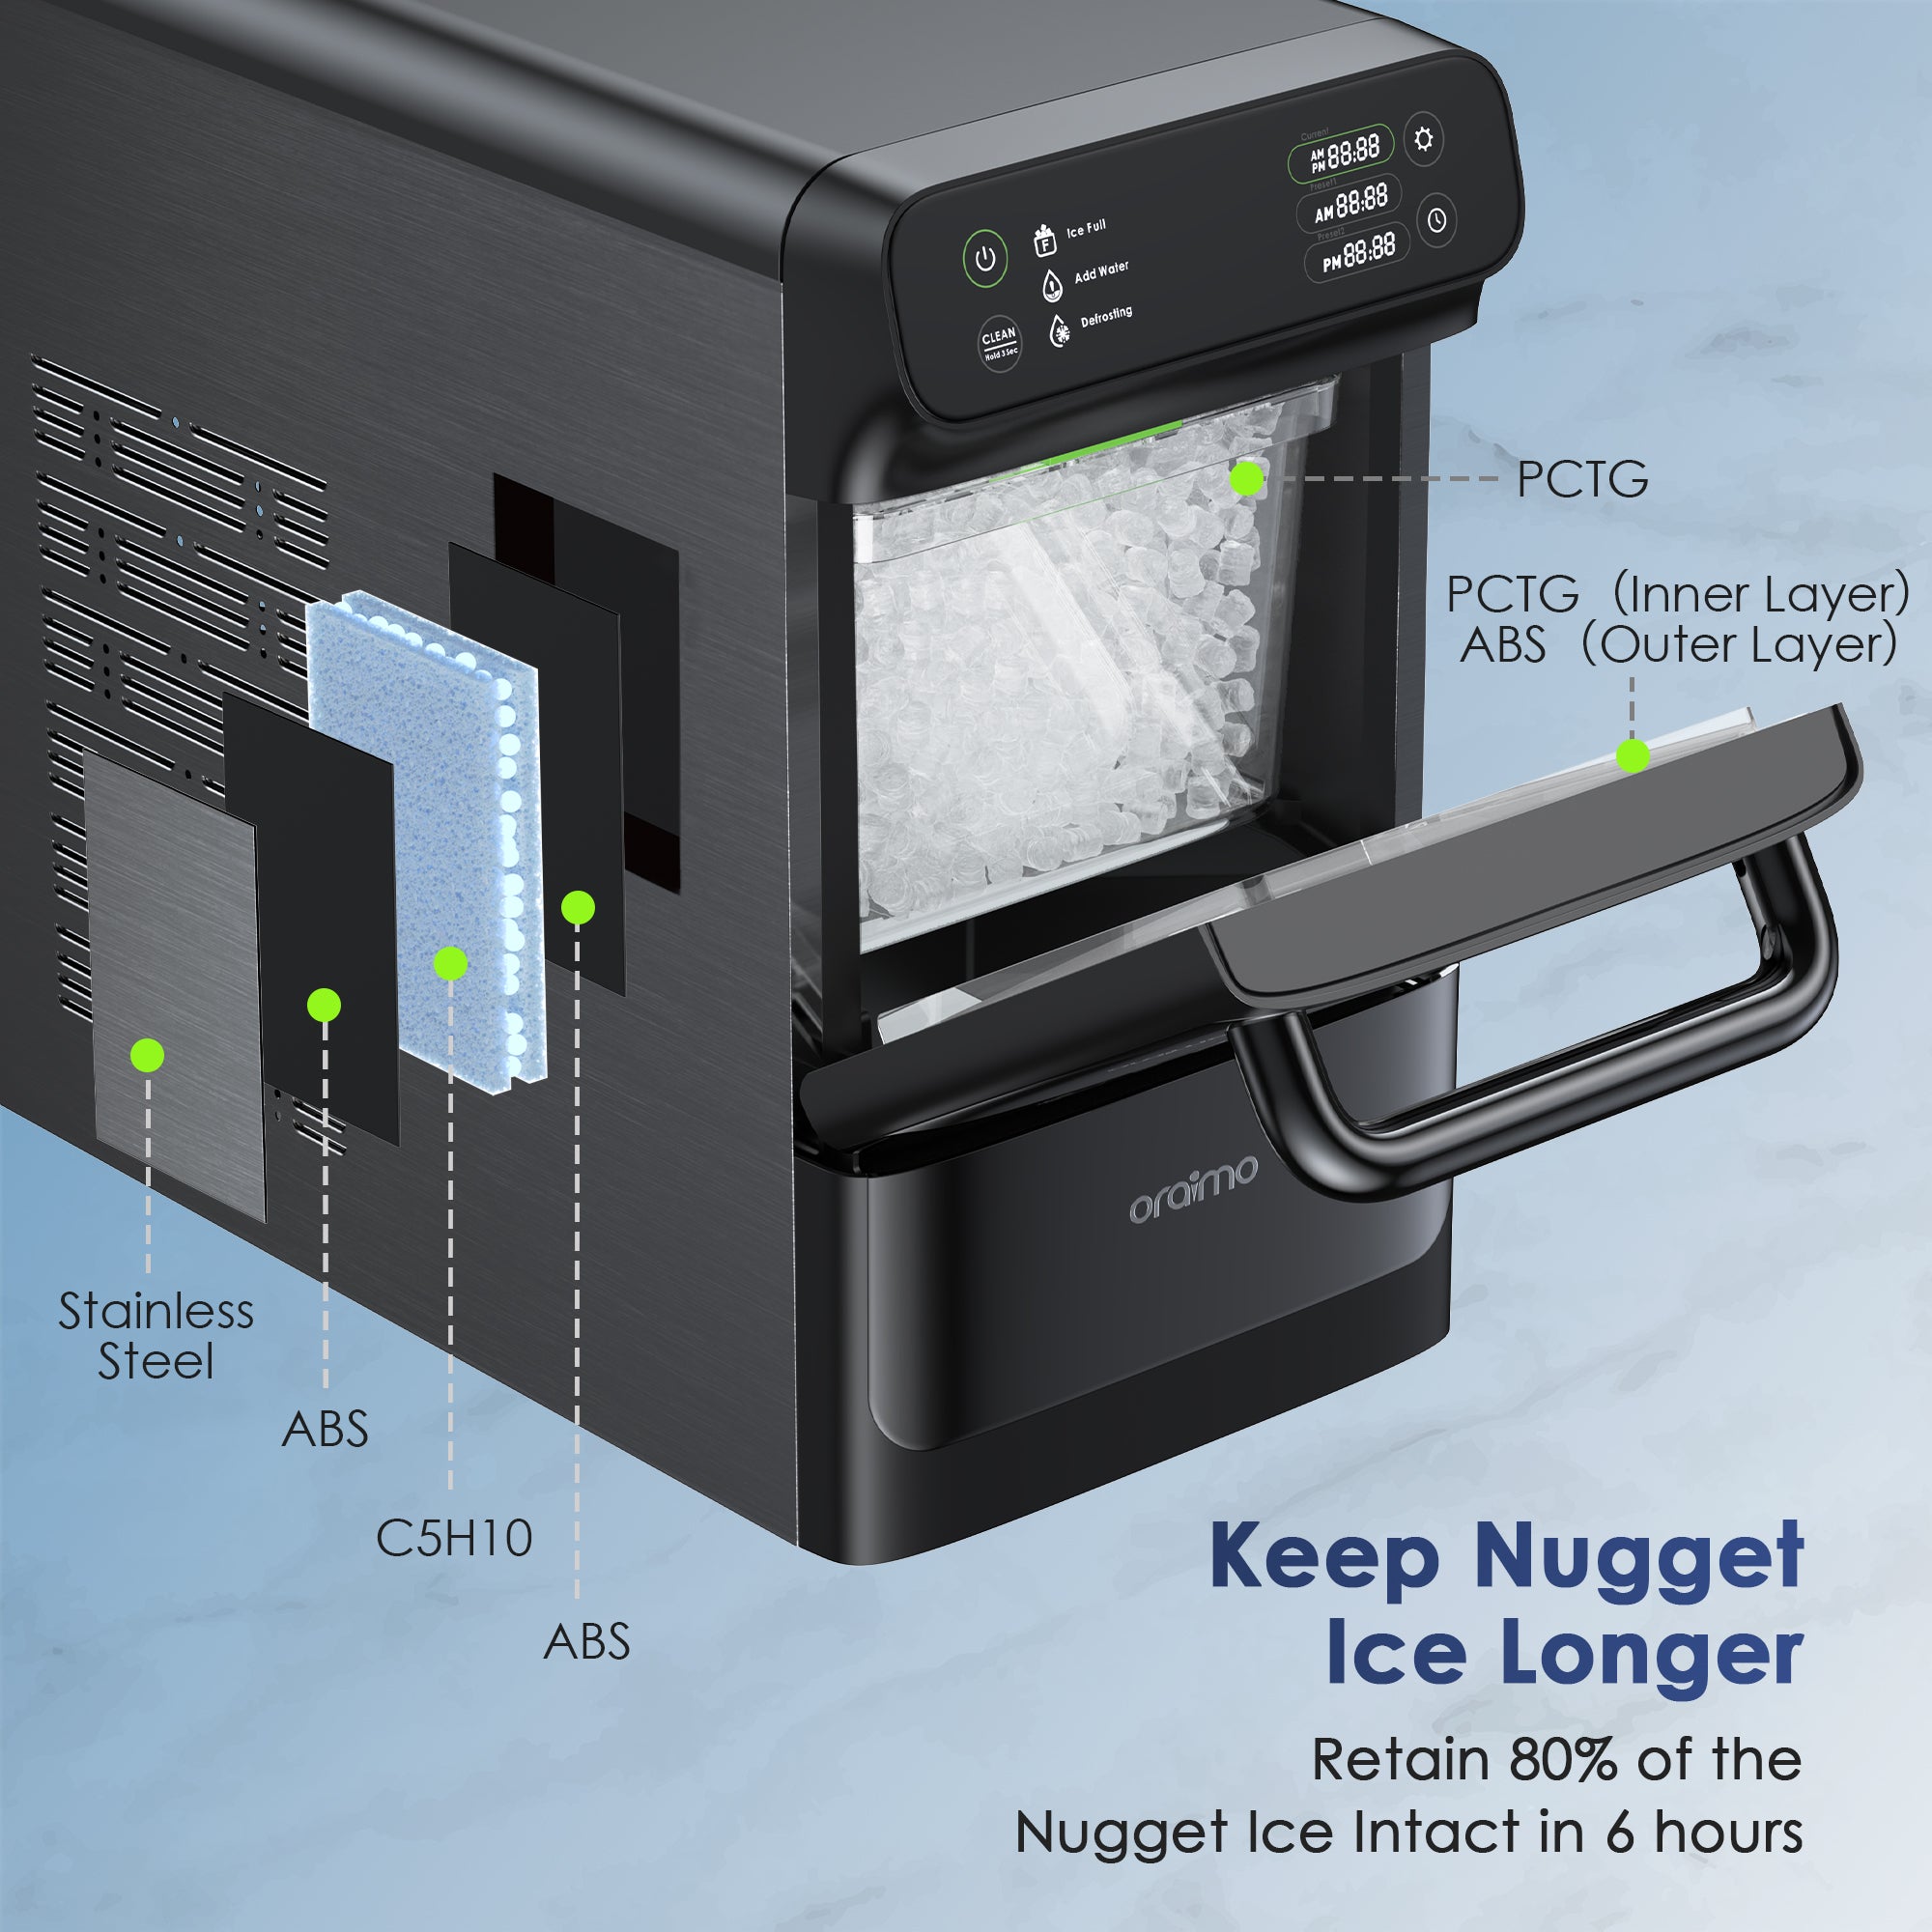 Oraimo Nugget Ice Maker 512A New in the box. $270 Retail